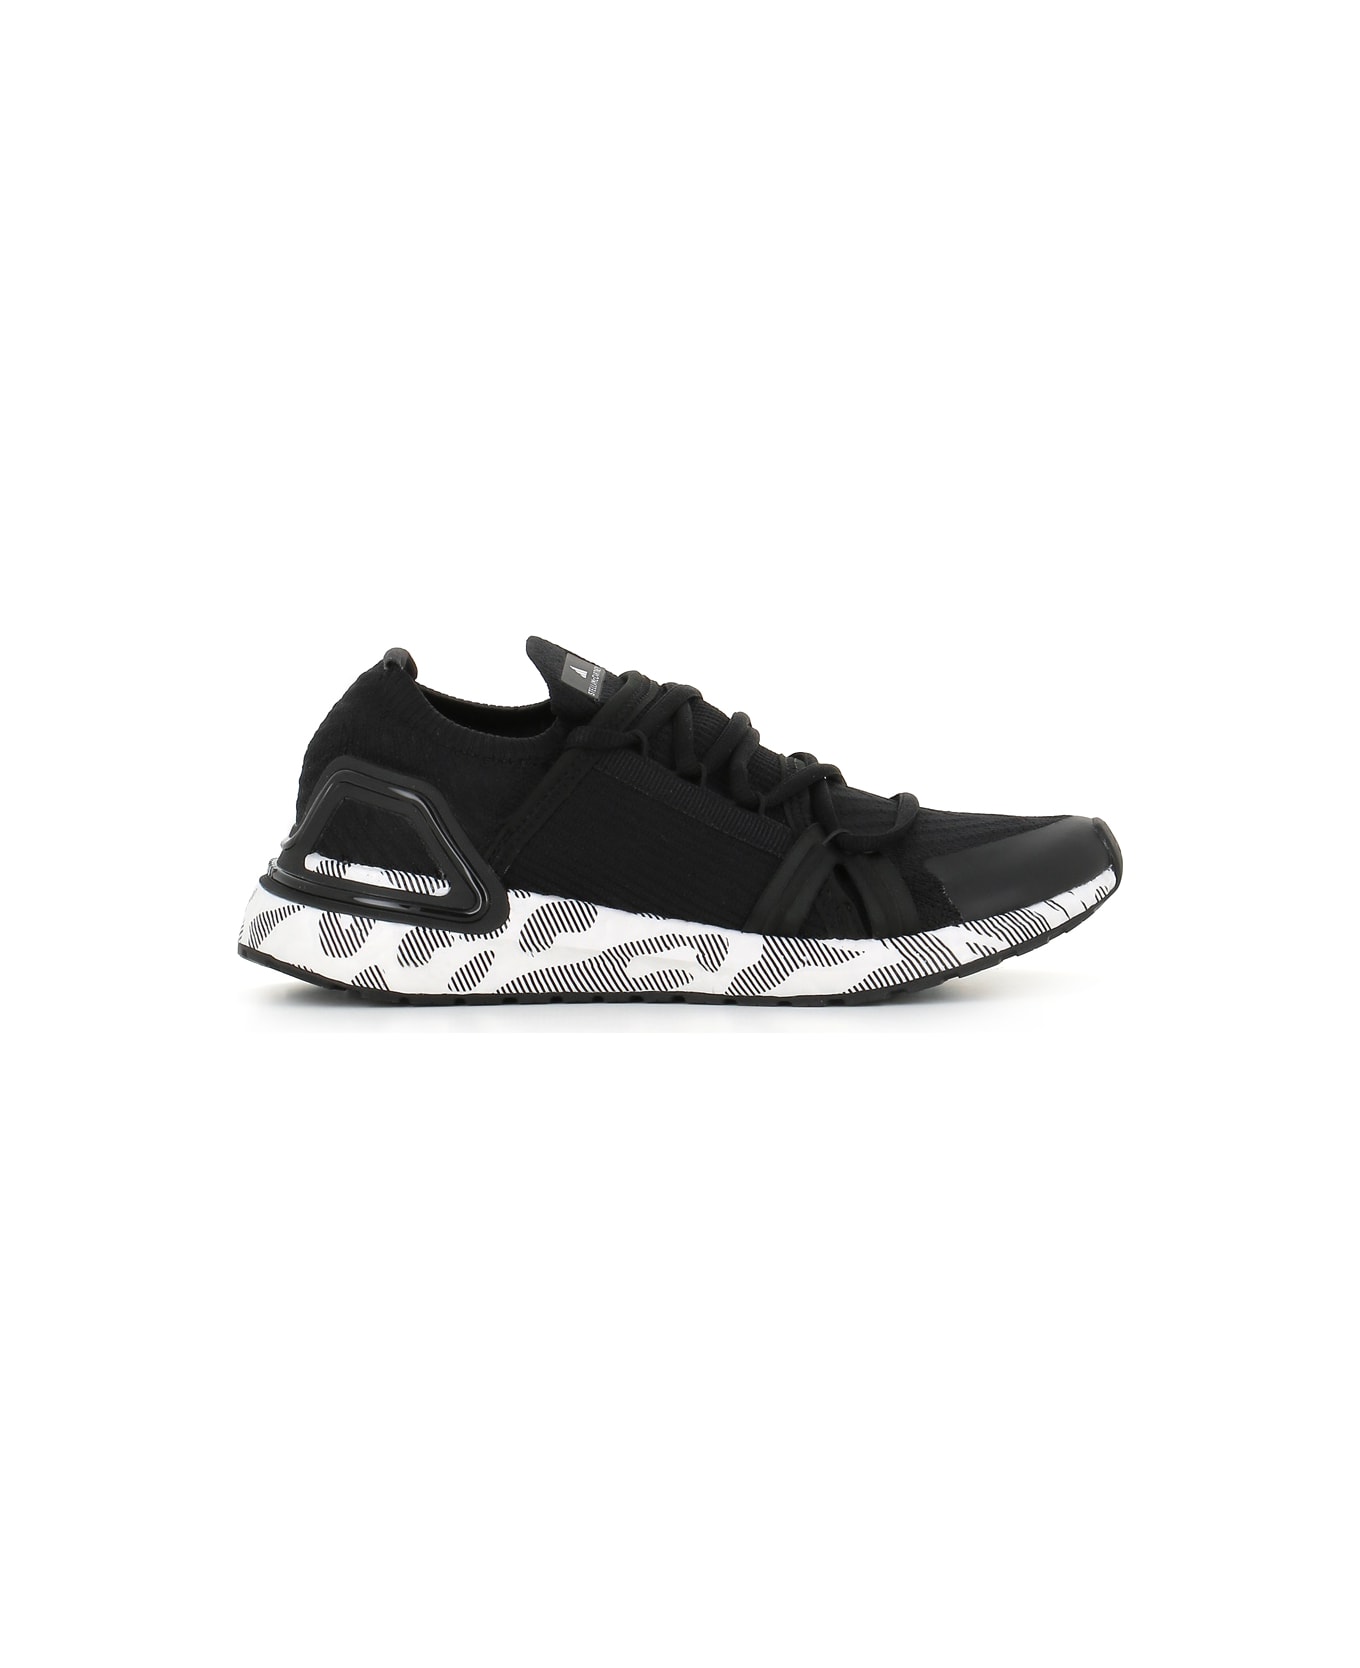 Adidas by Stella McCartney Sneakers Asmc Ultraboost 20 - Black/white スニーカー